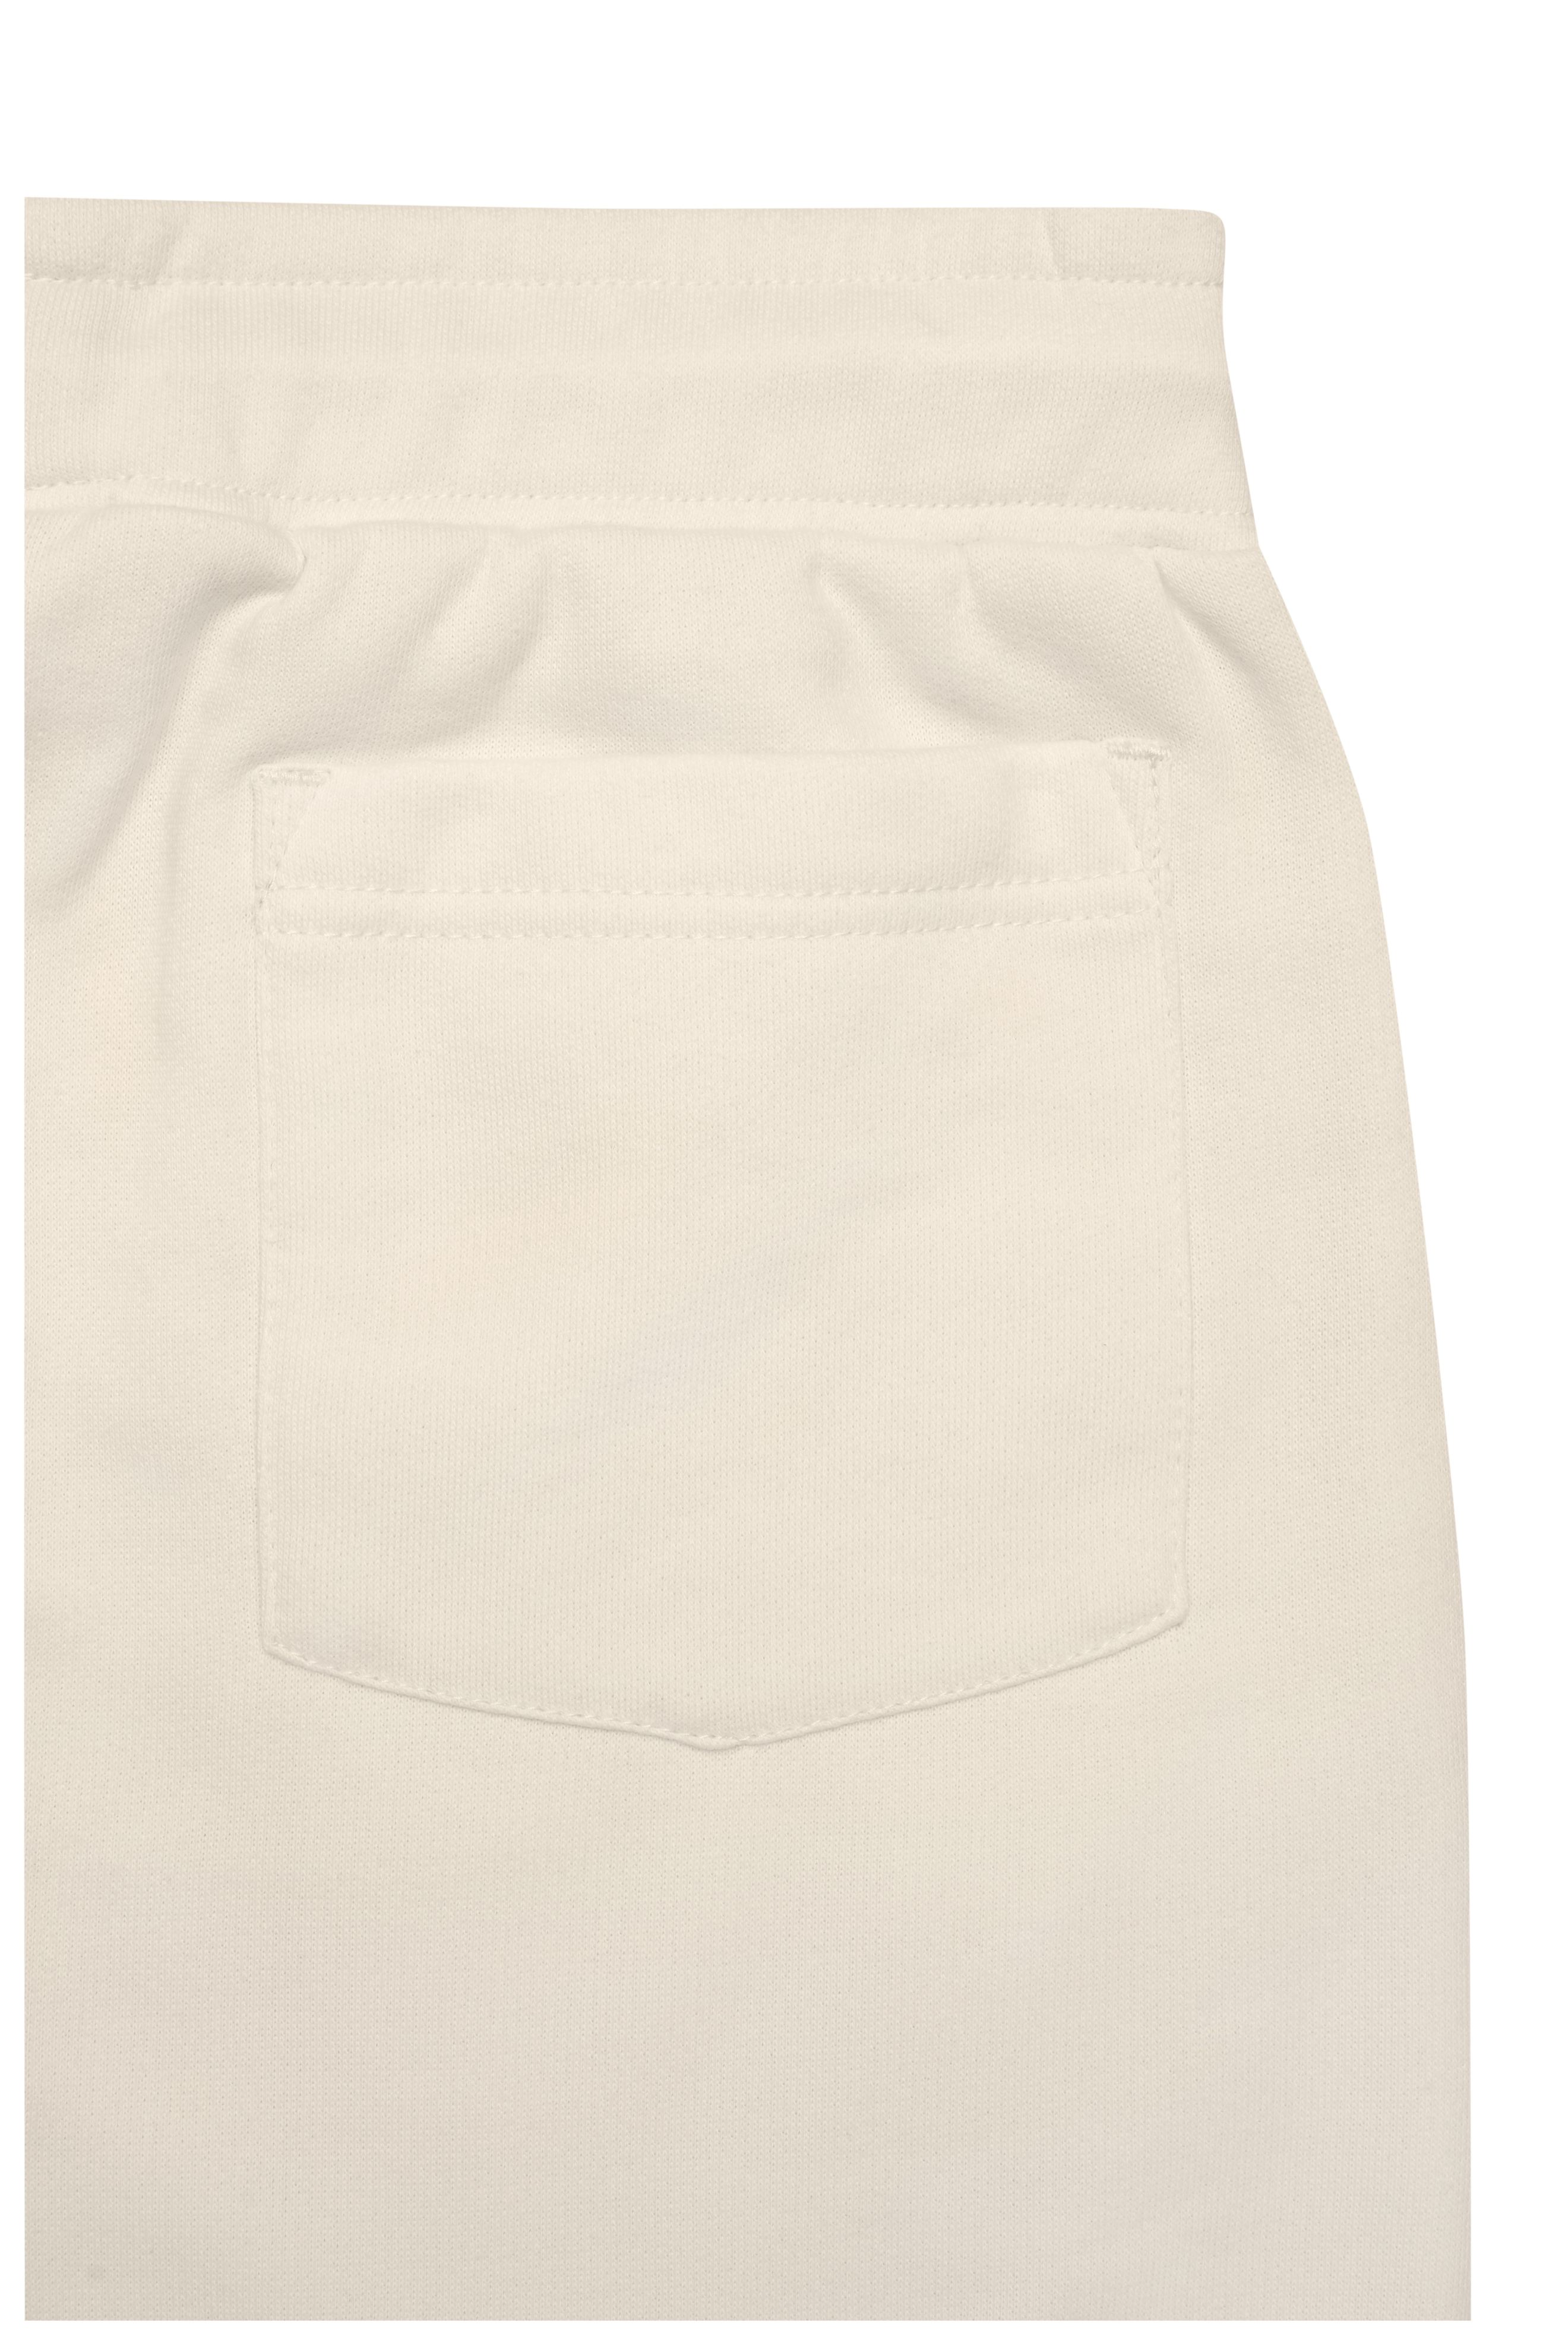 Ladies' Lounge Pants 8035 Modische Sweat-Hose aus BIO-Baumwolle